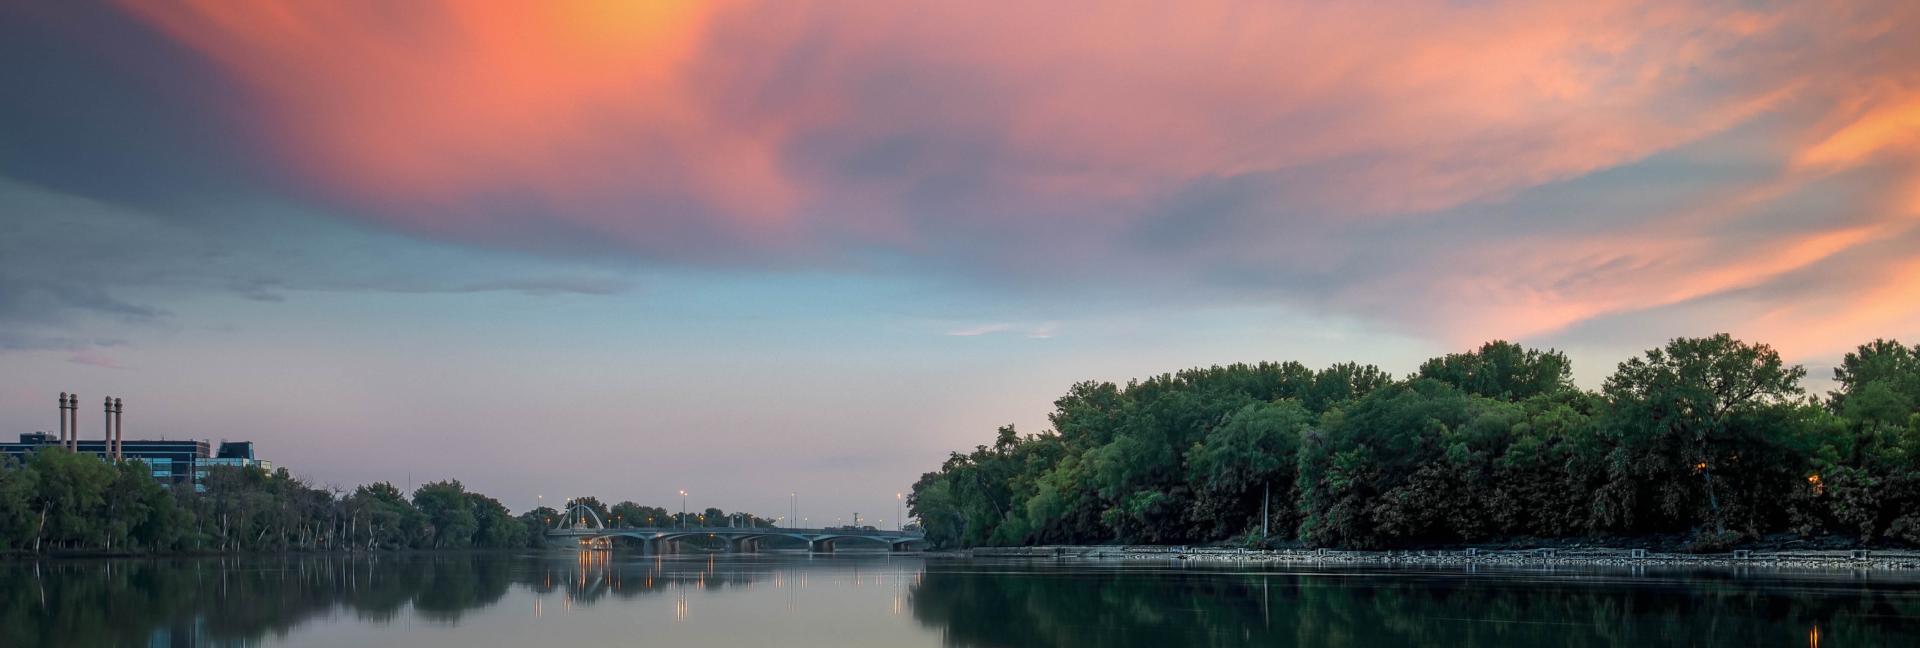 Red River near Winnipeg, Manitoba - Shutterstock photo